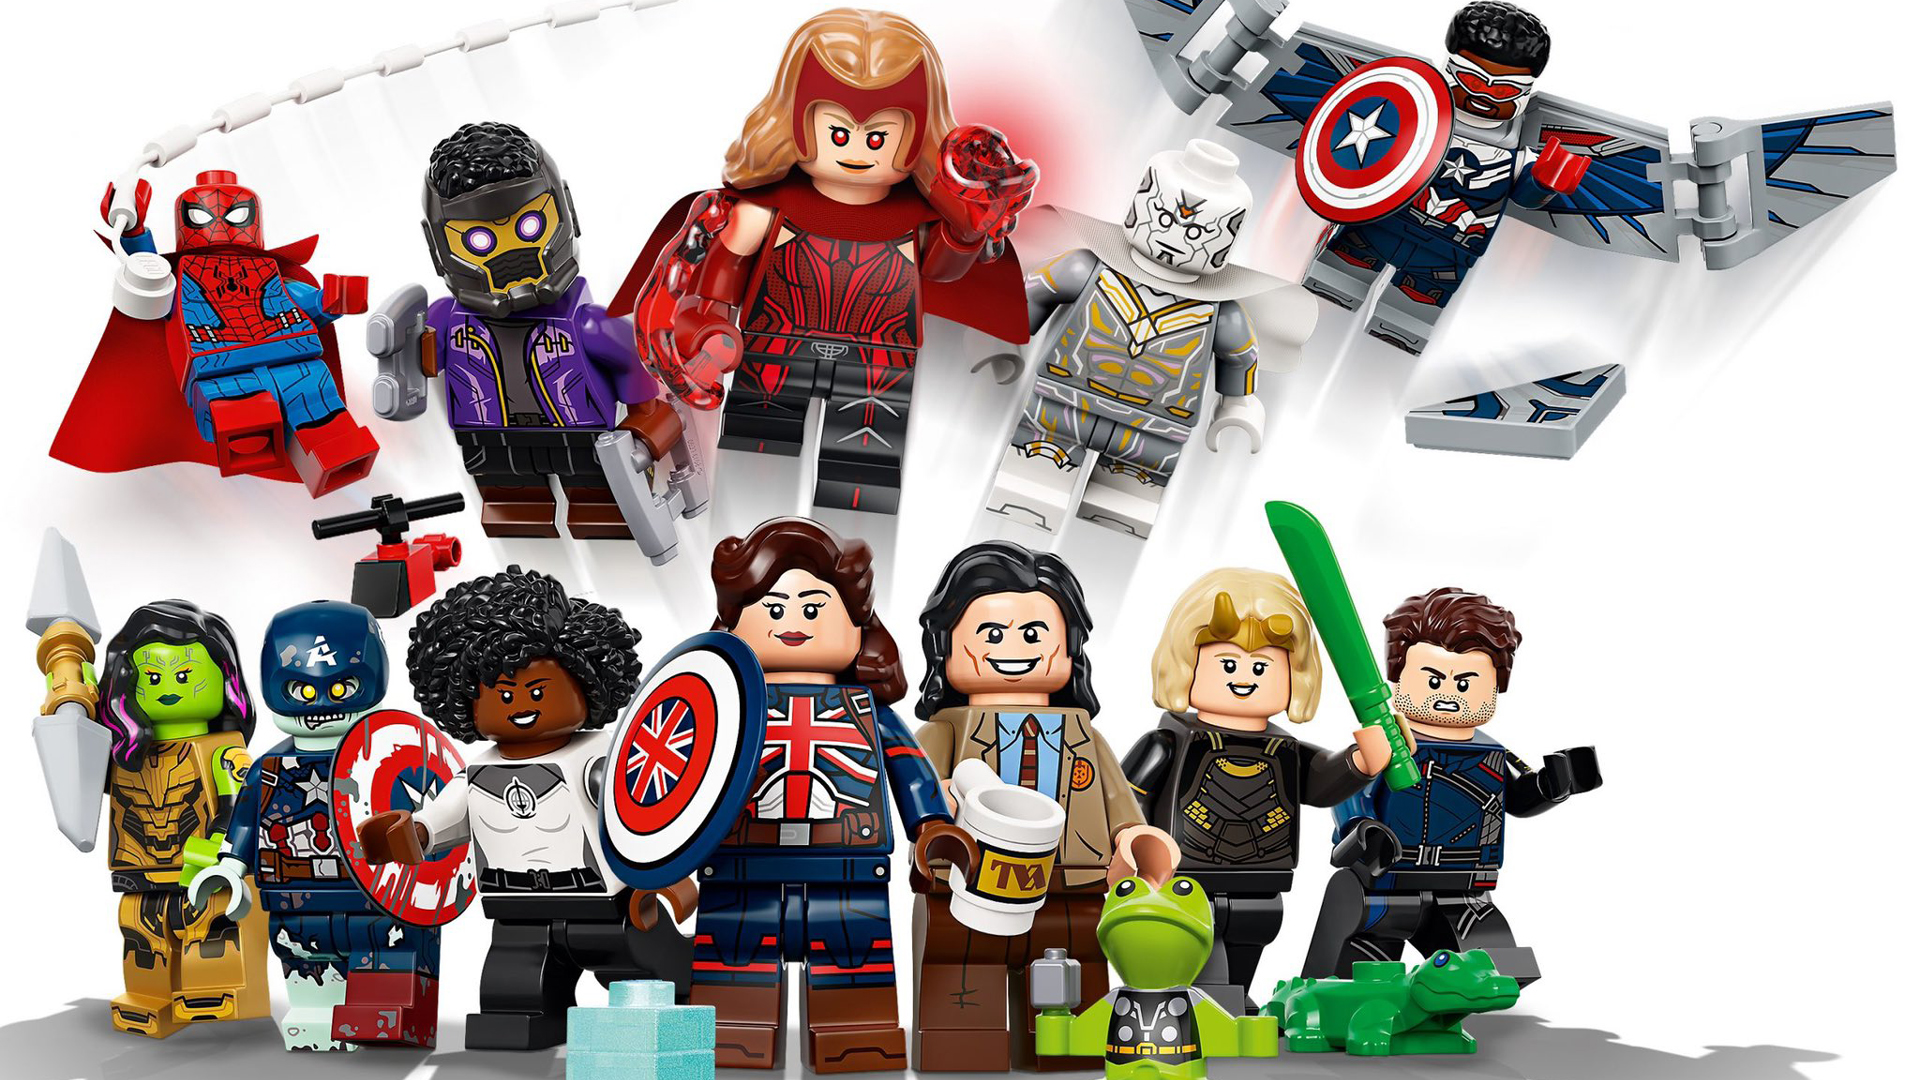 LEGO Marvel Disney Plus minifigures